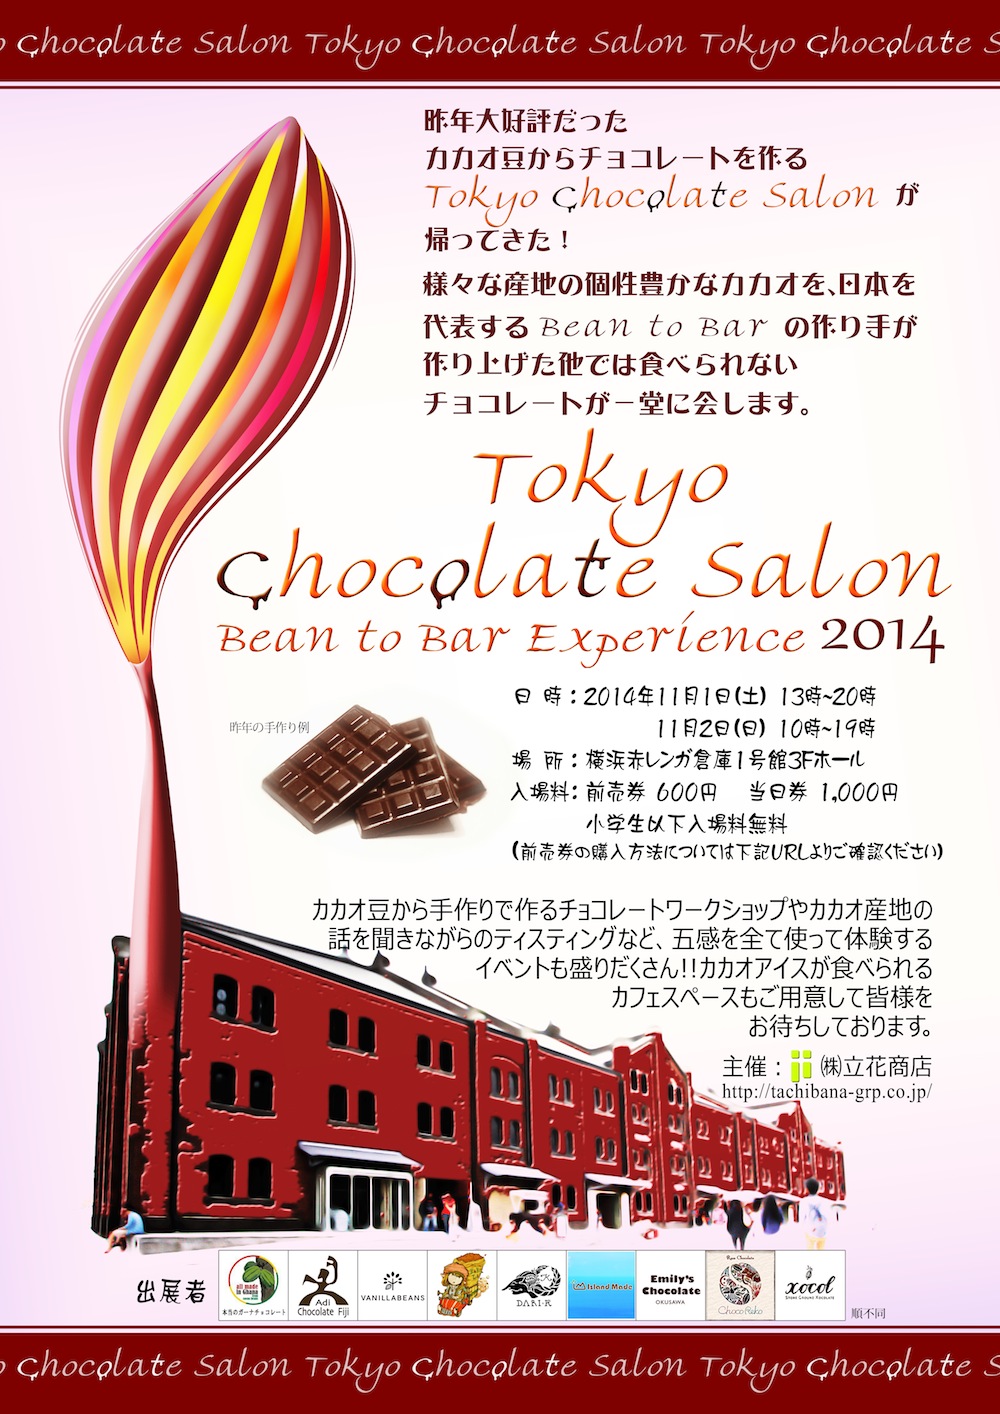 Tokyo Chocolate Salon 2014